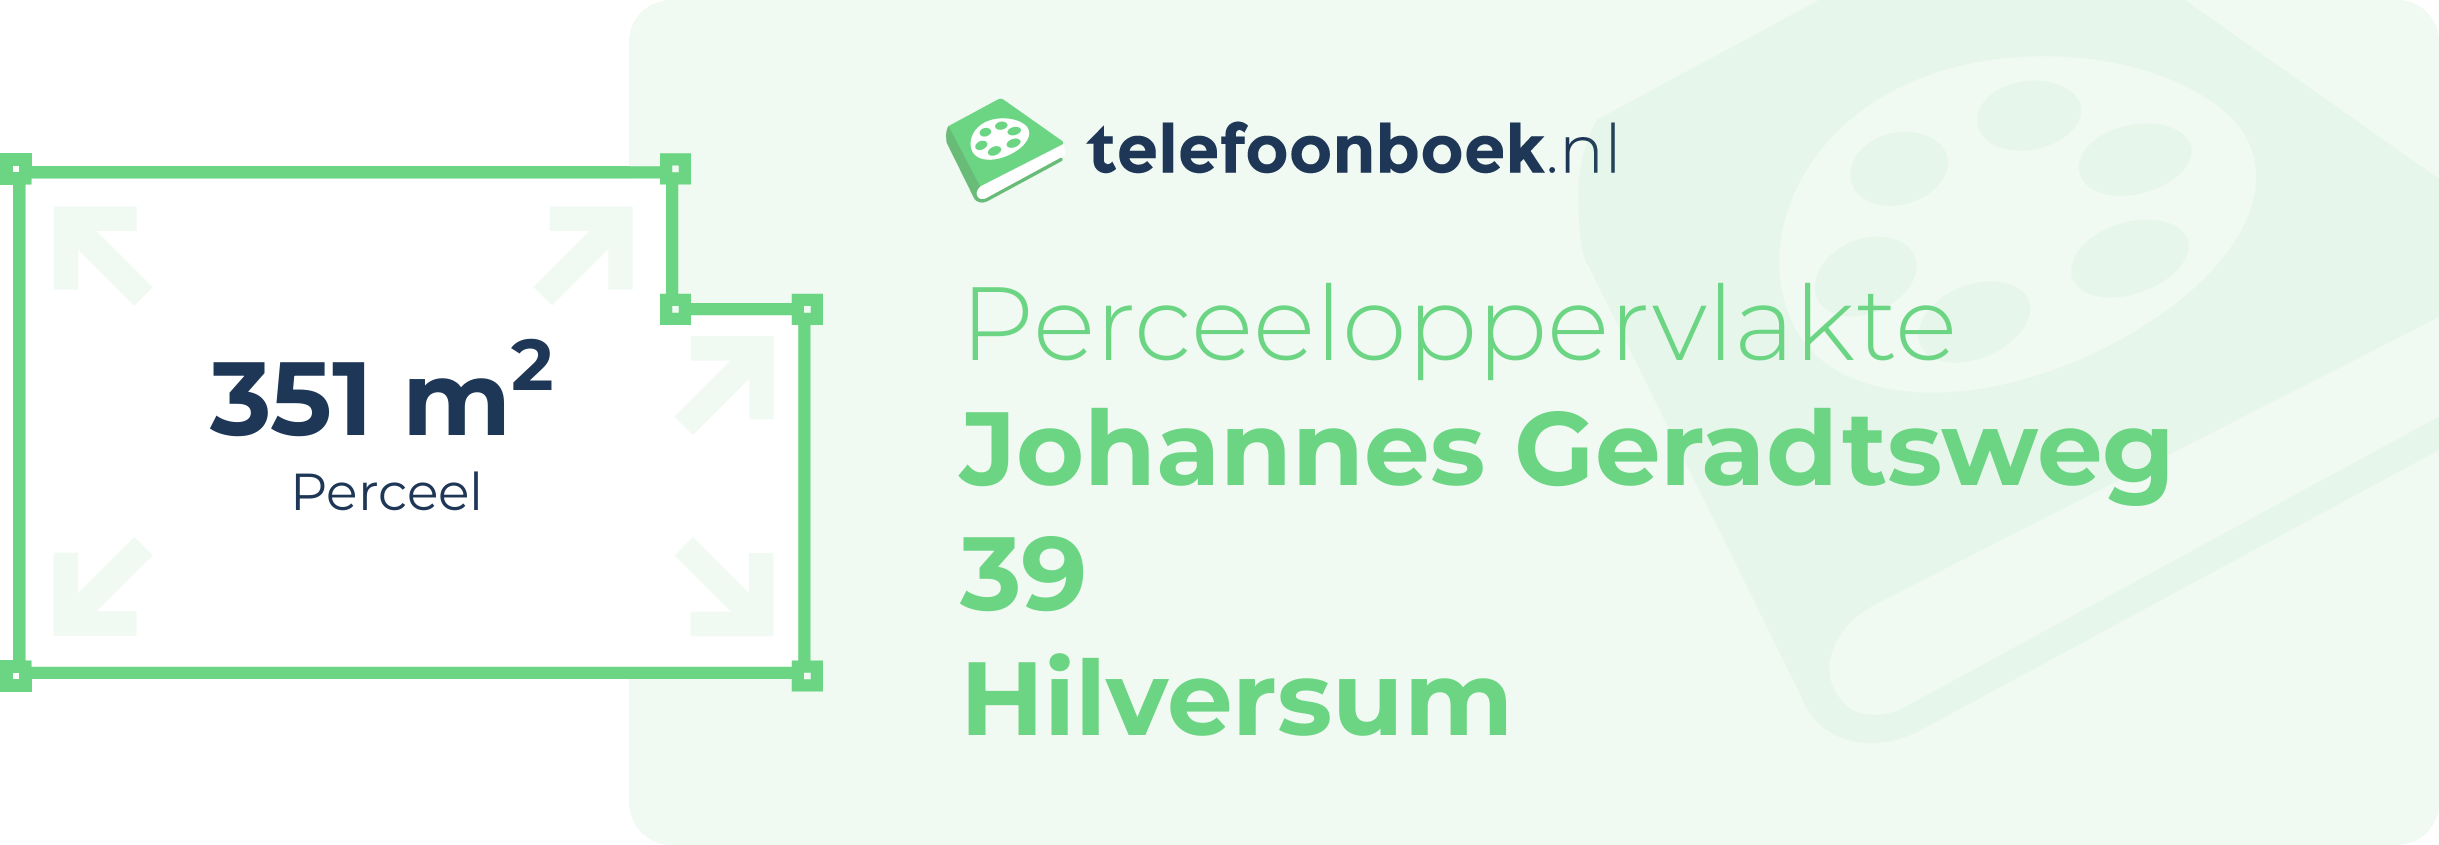 Perceeloppervlakte Johannes Geradtsweg 39 Hilversum